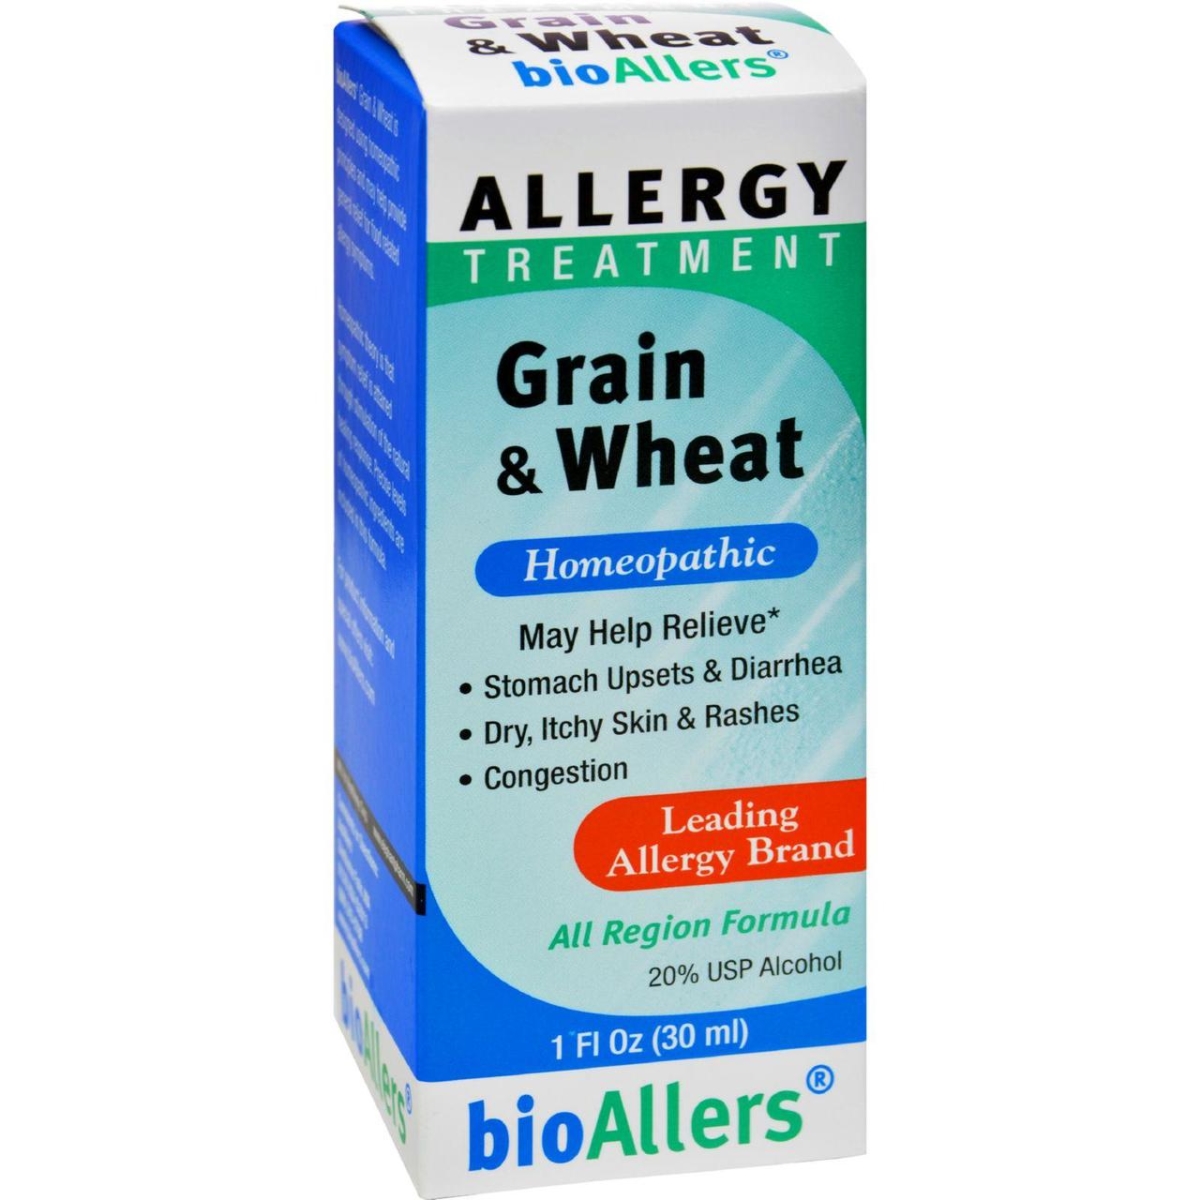 Bio-allers Hg0781005 1 Fl Oz Grain & Wheat Allergy Treatment